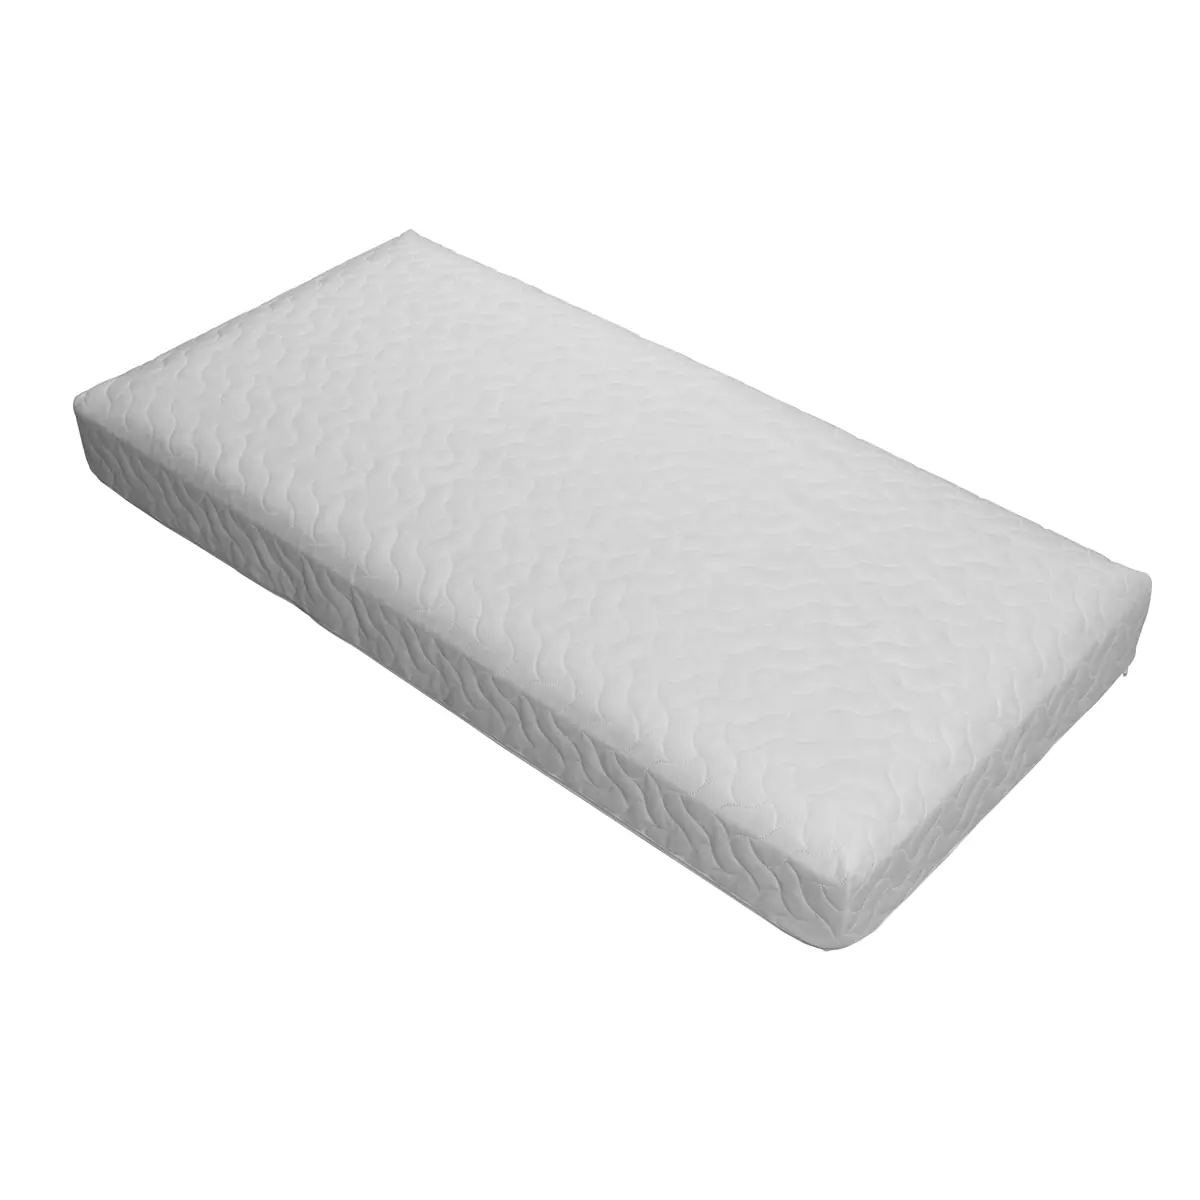 Image of Ventalux Non Allergenic Spring Interior Cot Bed Mattress-White (140x70)